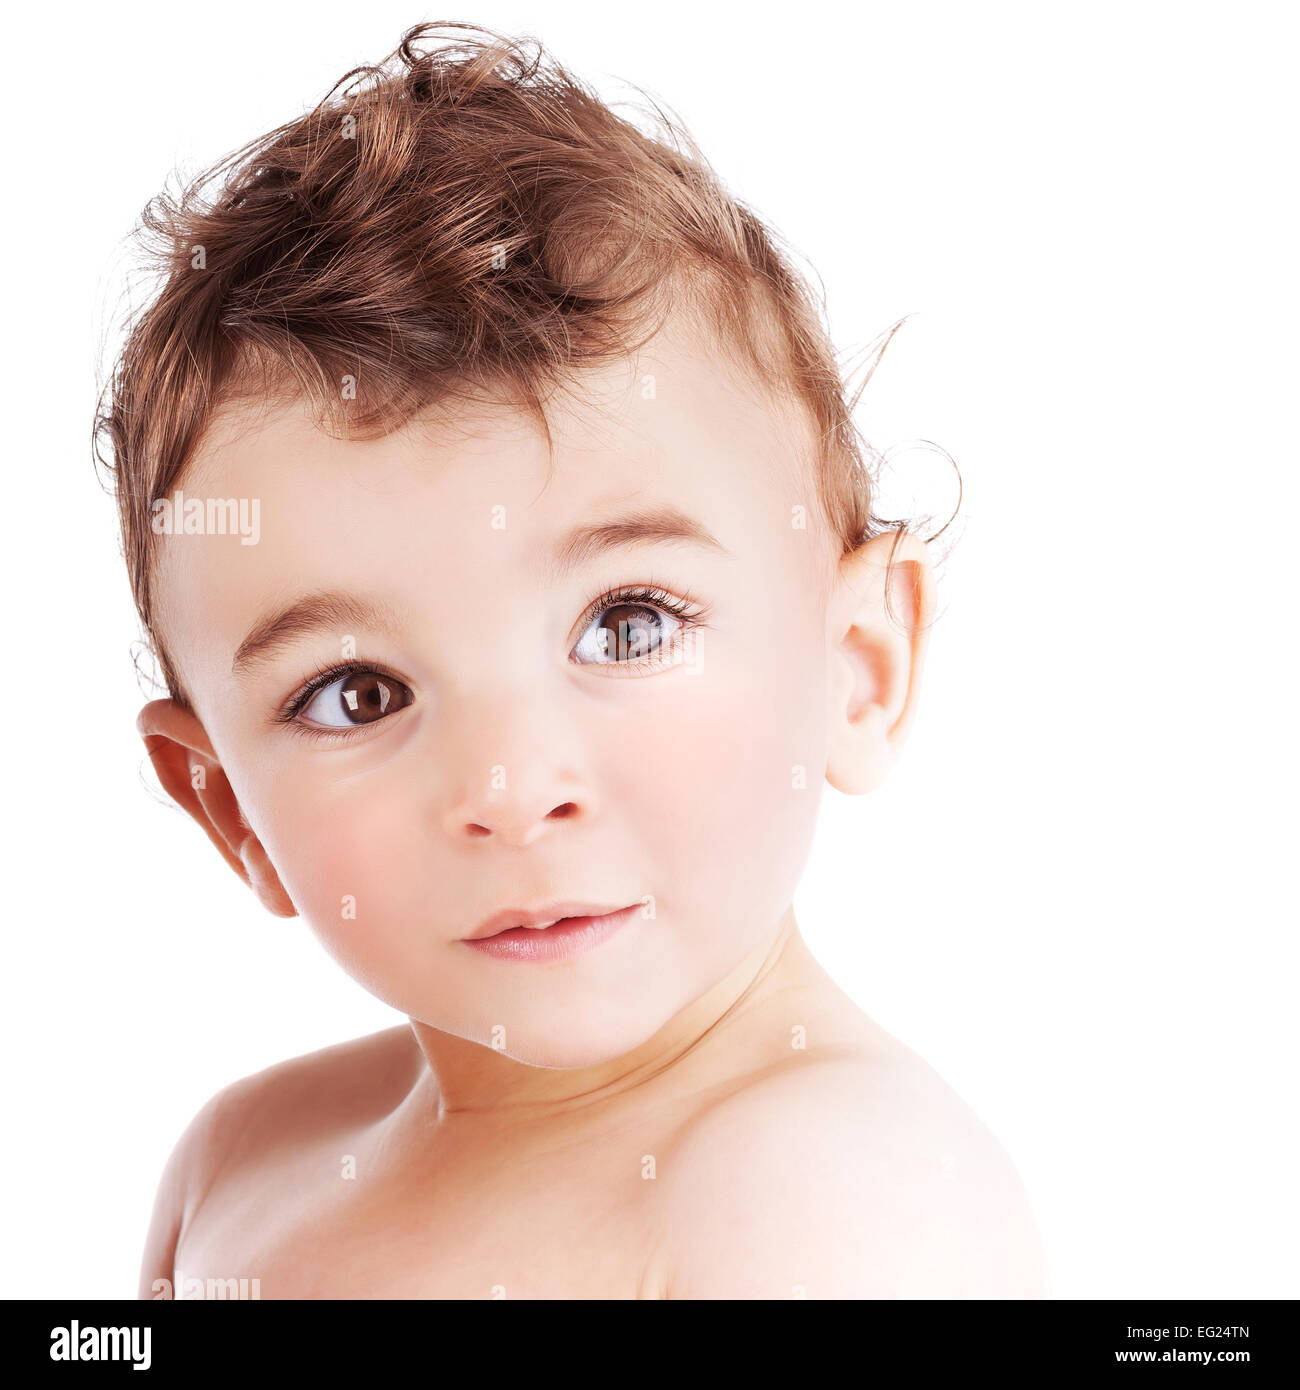 cute baby boy face wallpaper